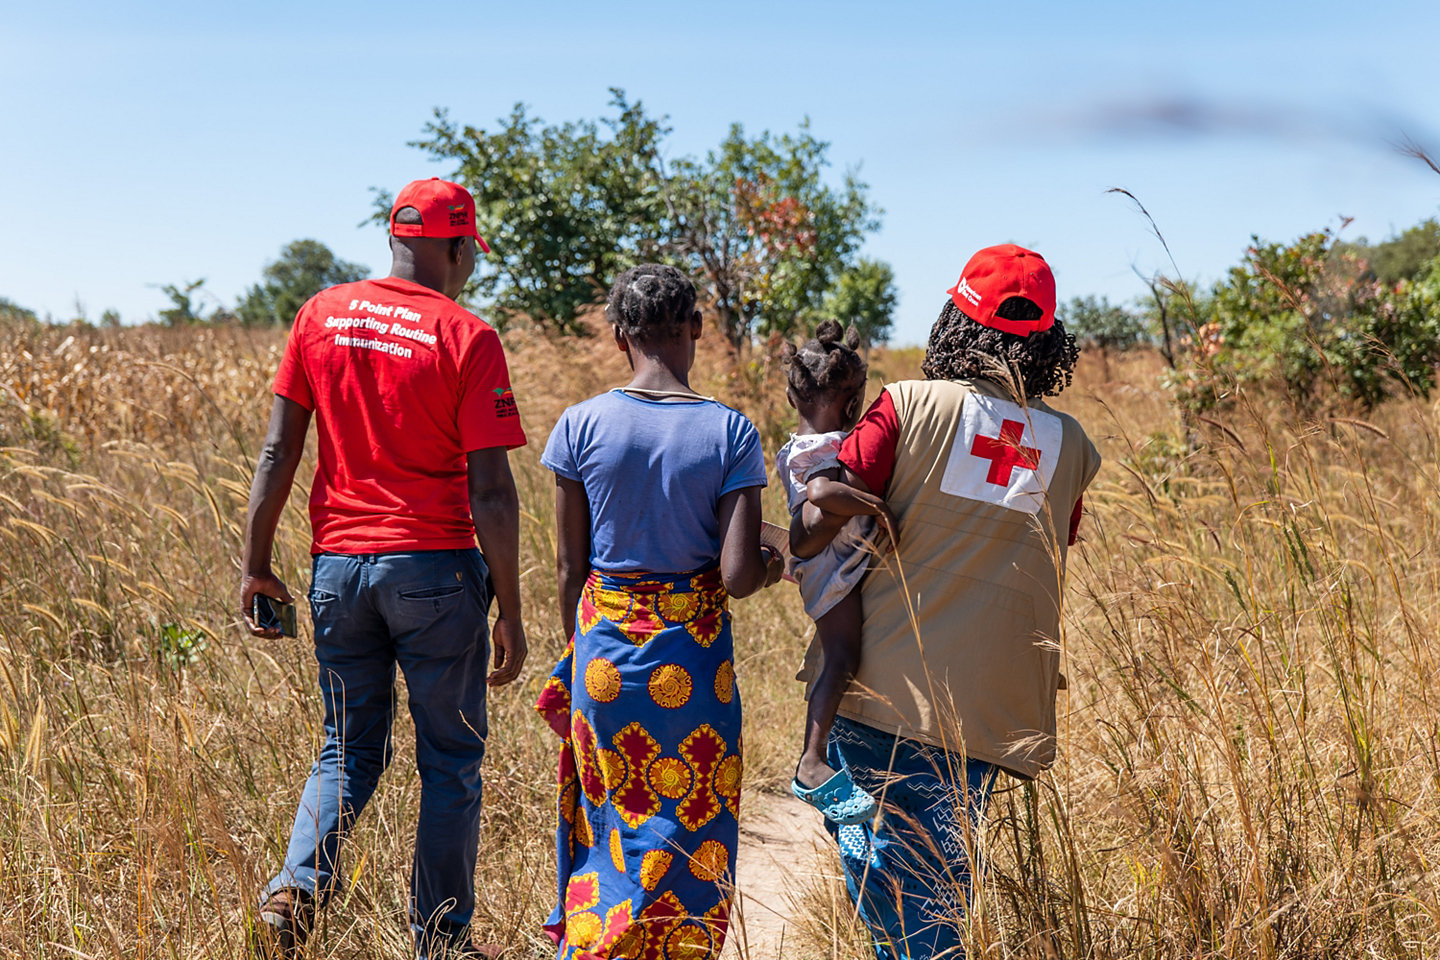 Røde Kors Zambia